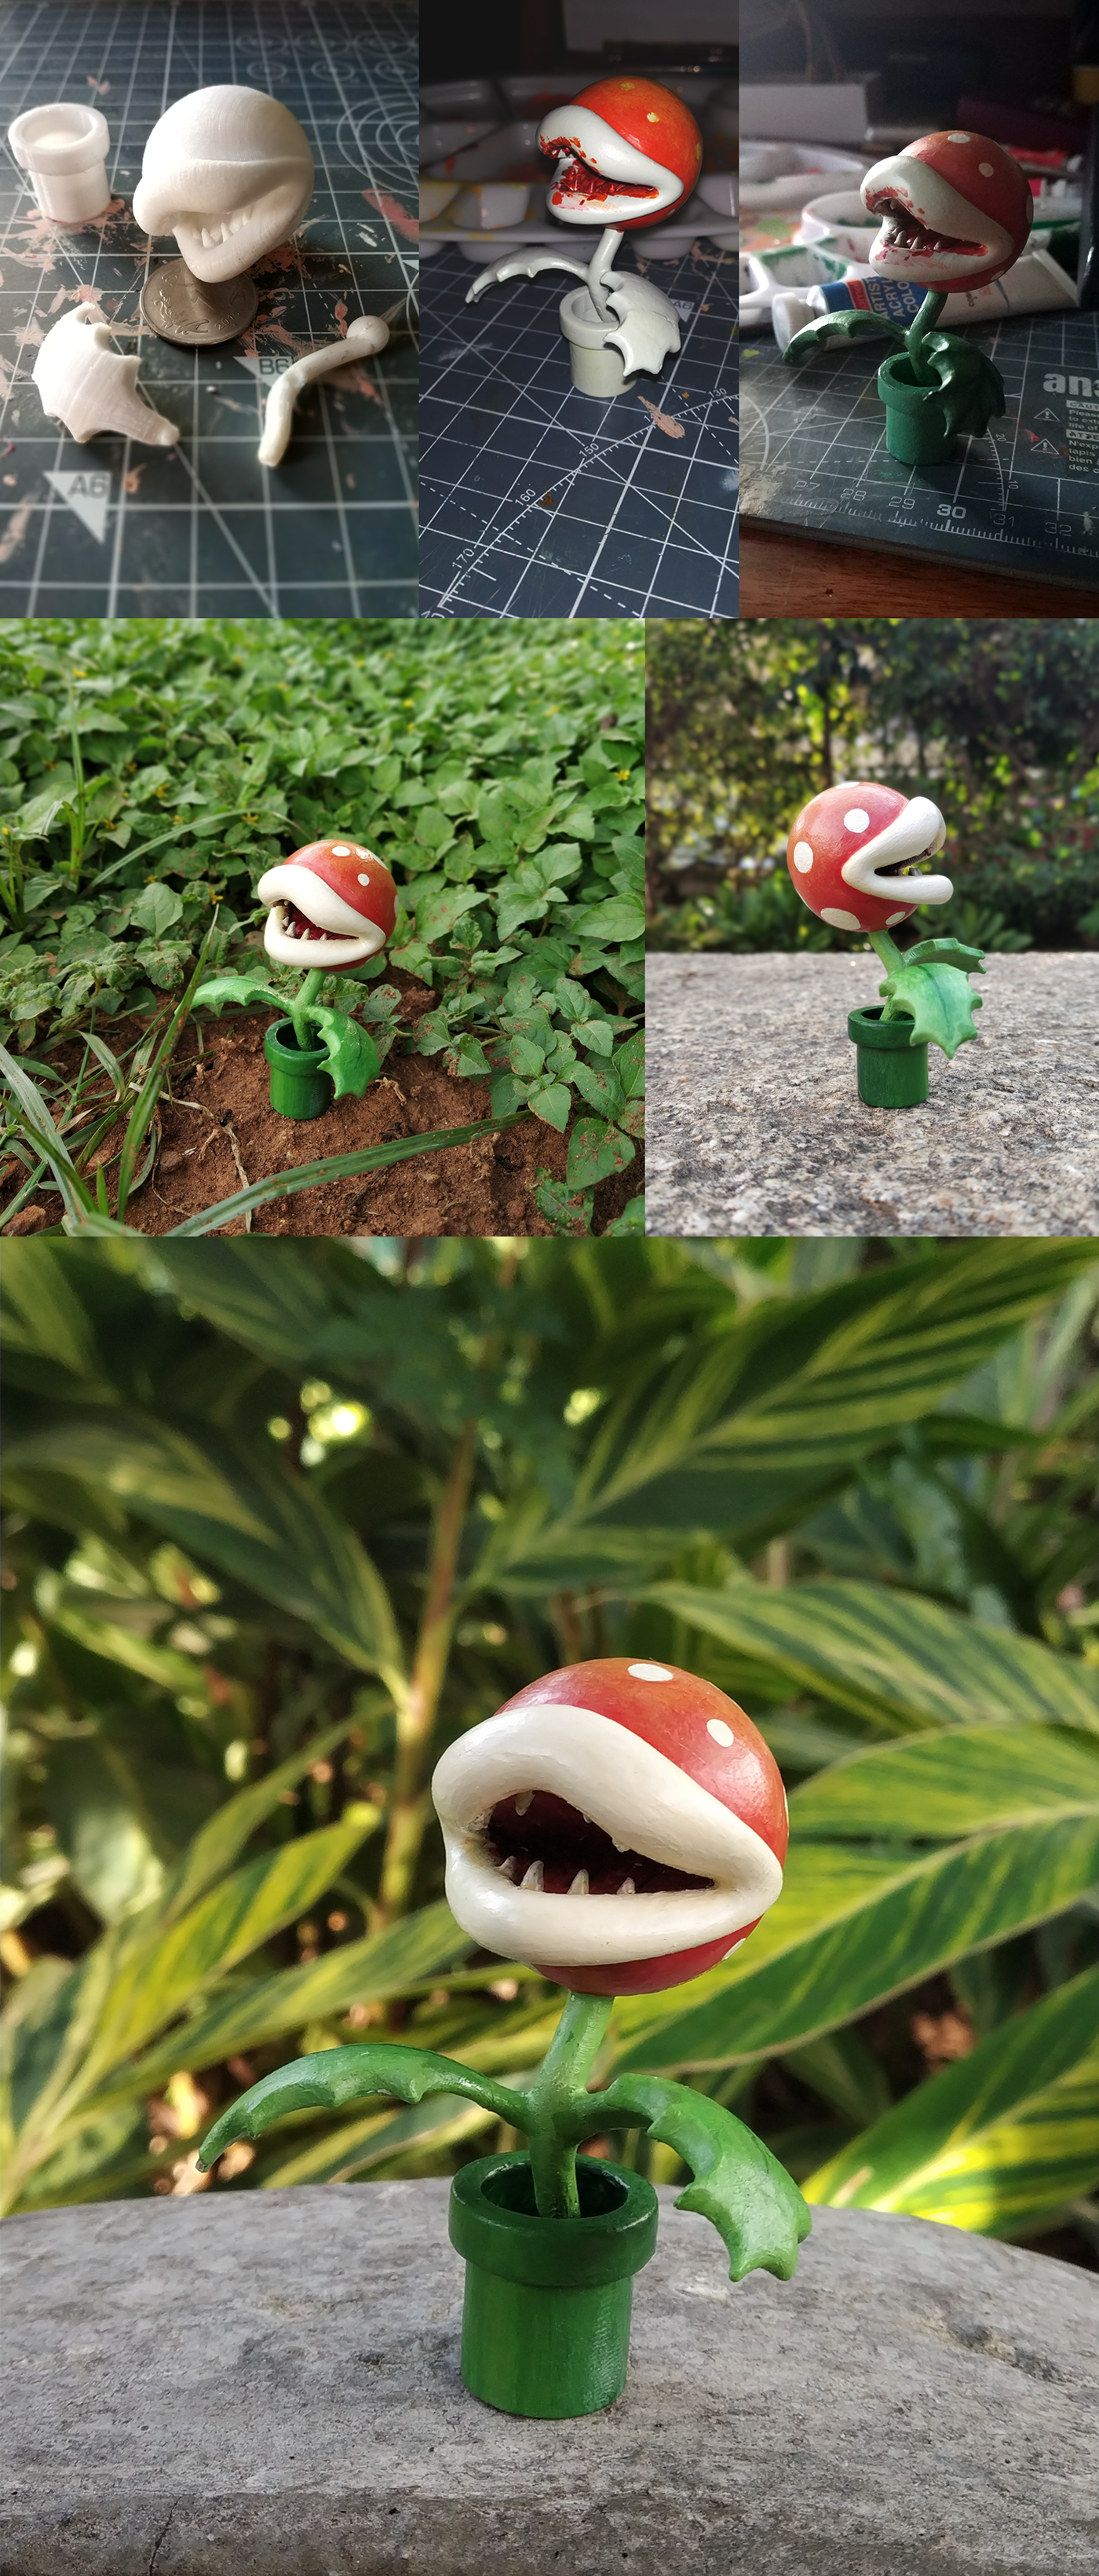 Piranha Plant mario Nintendo toys Fan Art video game pitcher plant Retro iconic game